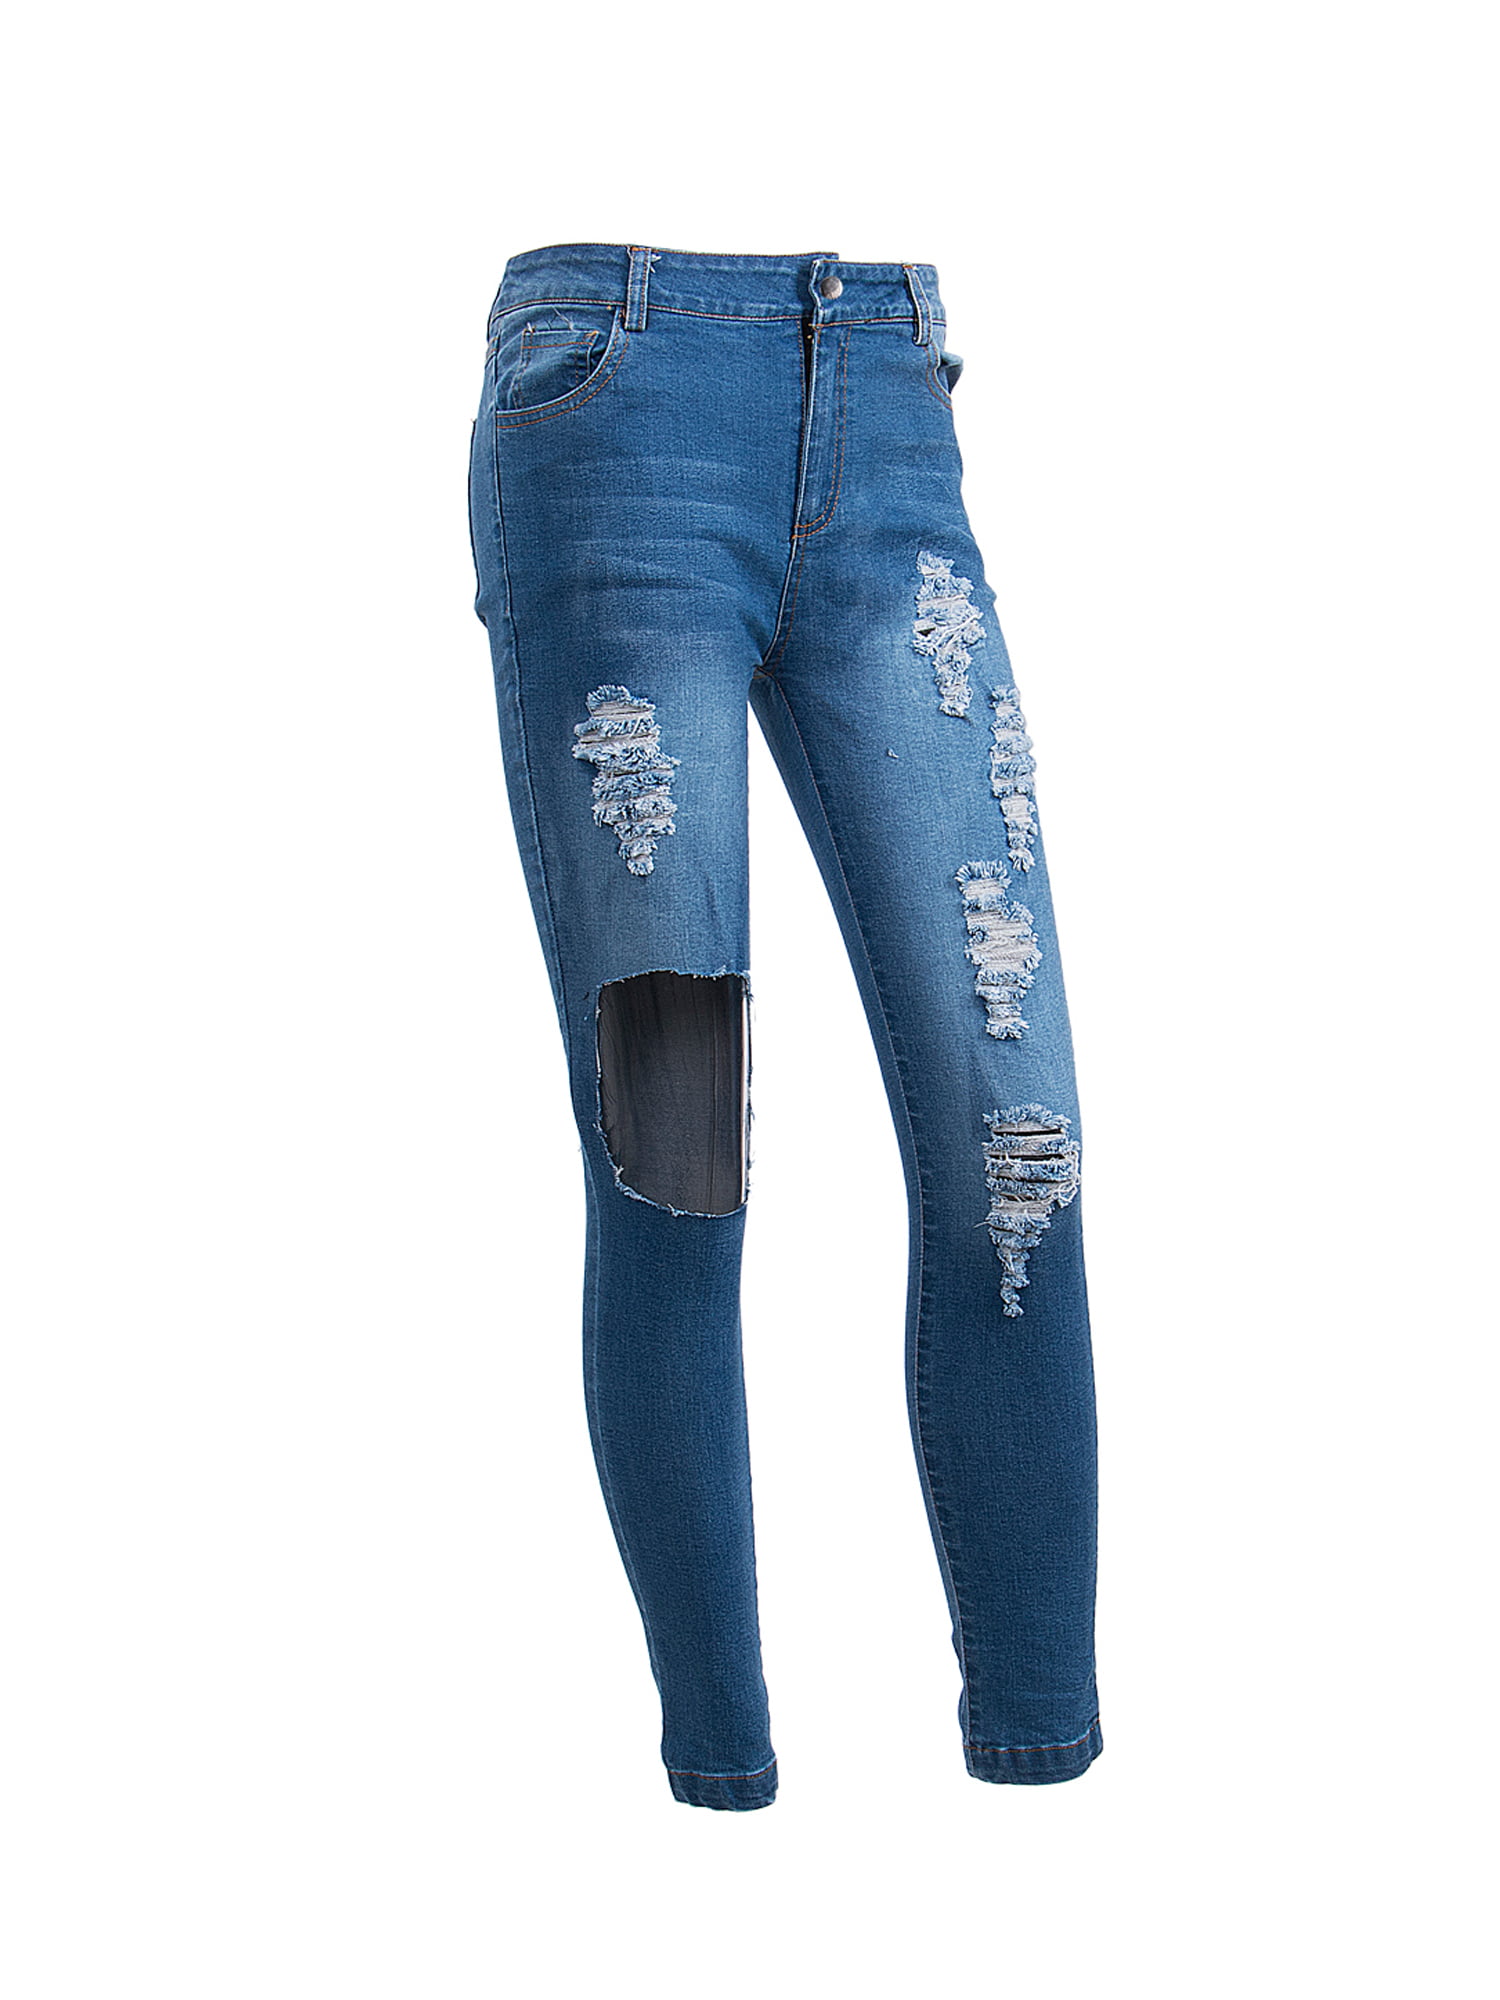 dark blue ripped skinny jeans womens